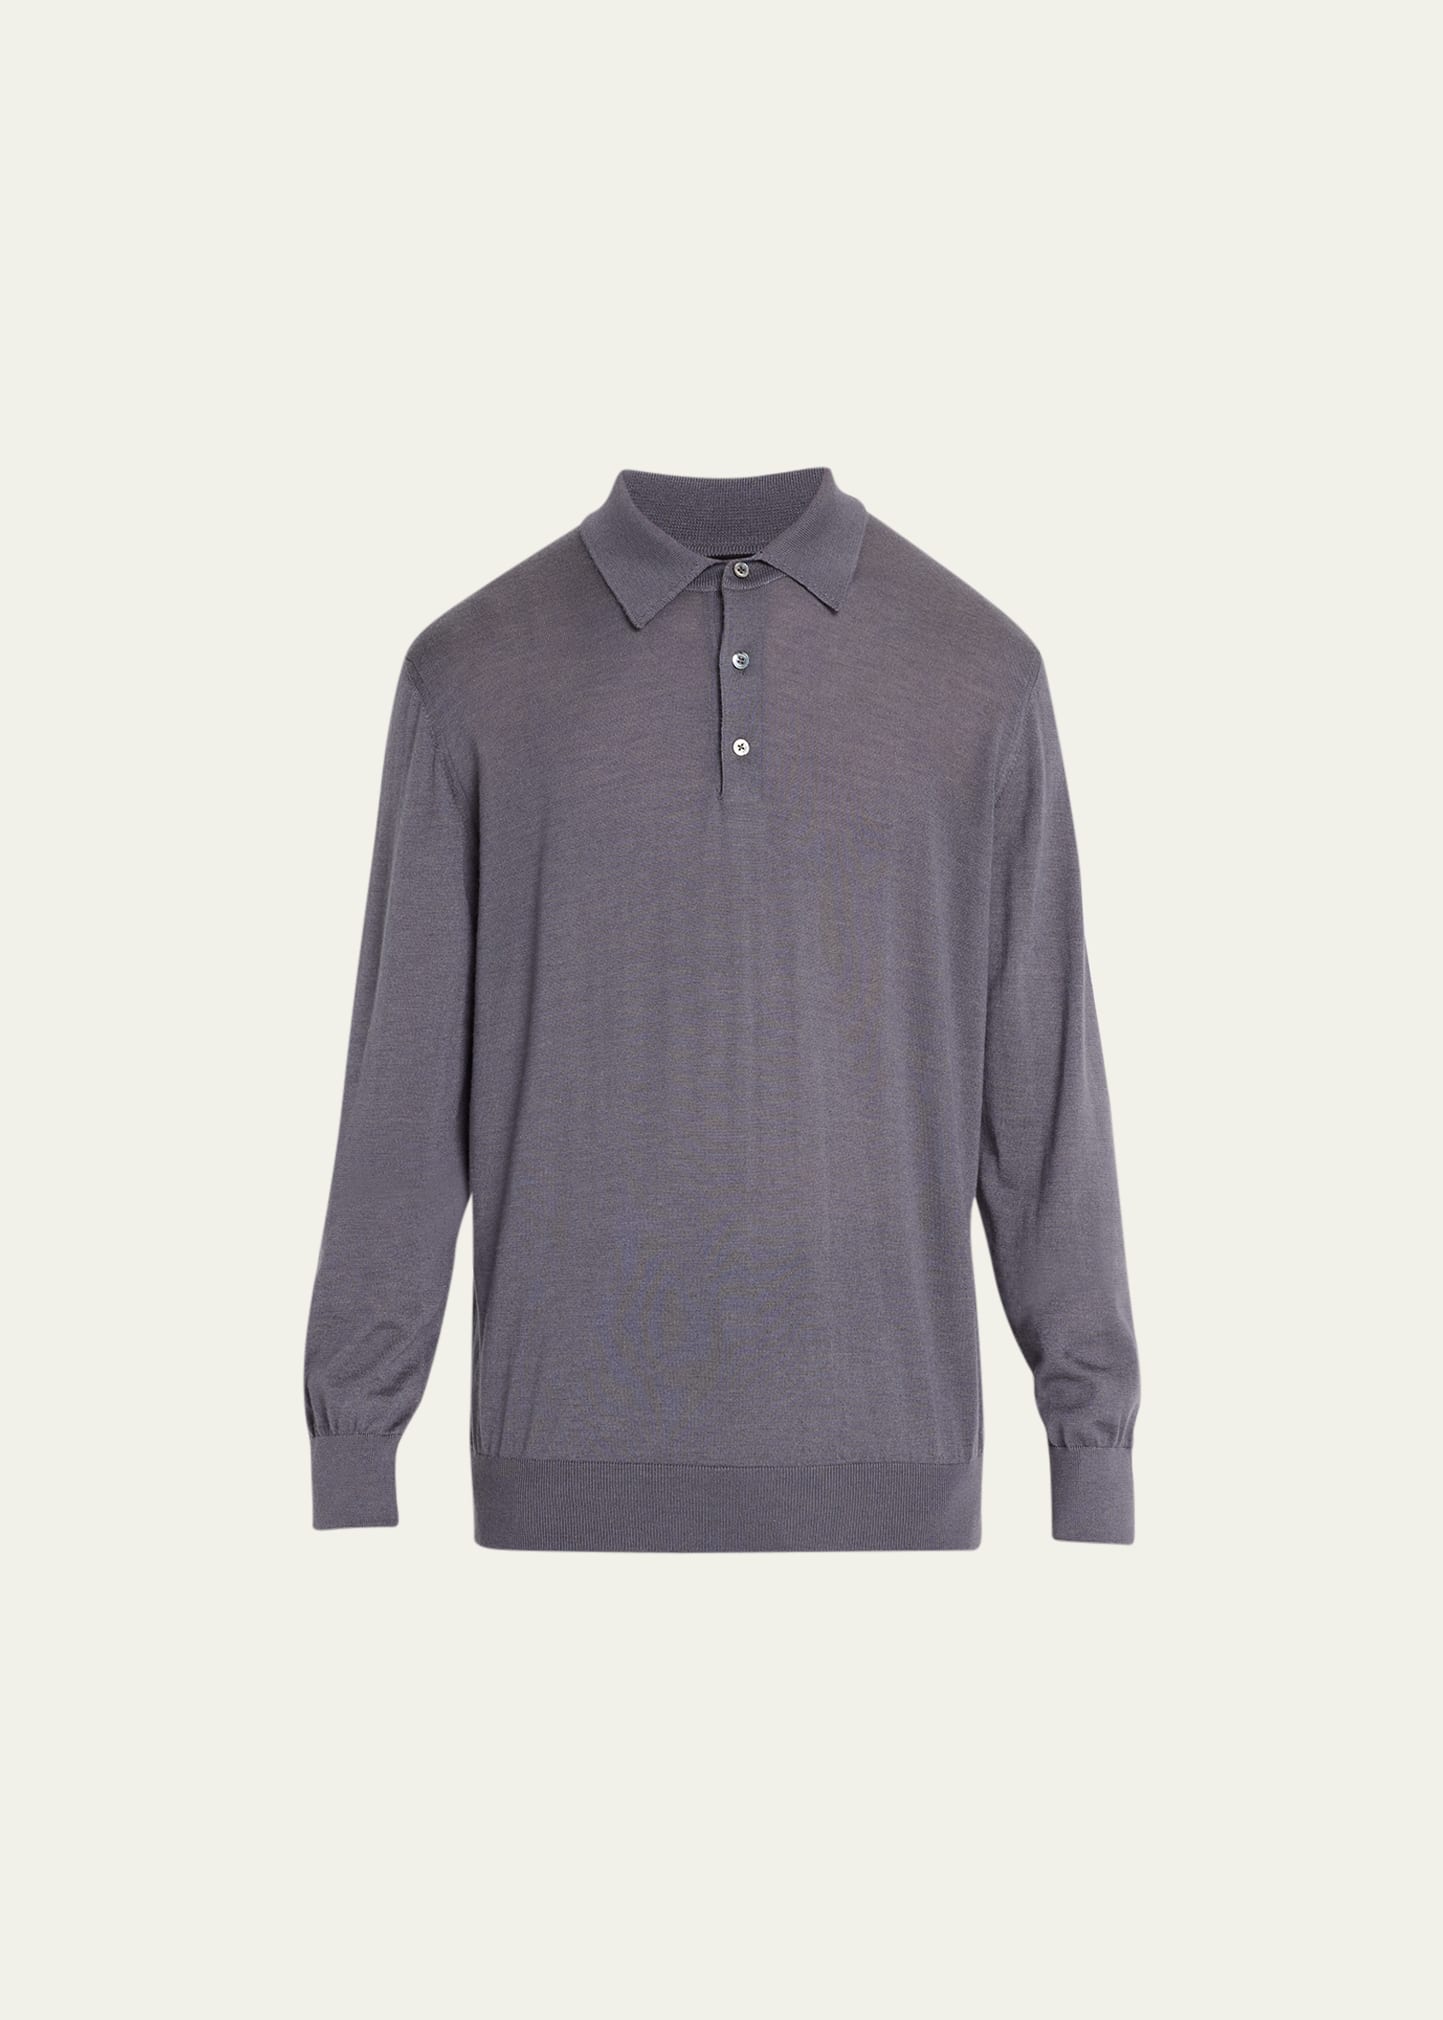 Charvet Men's Solid Long-Sleeve Polo Shirt